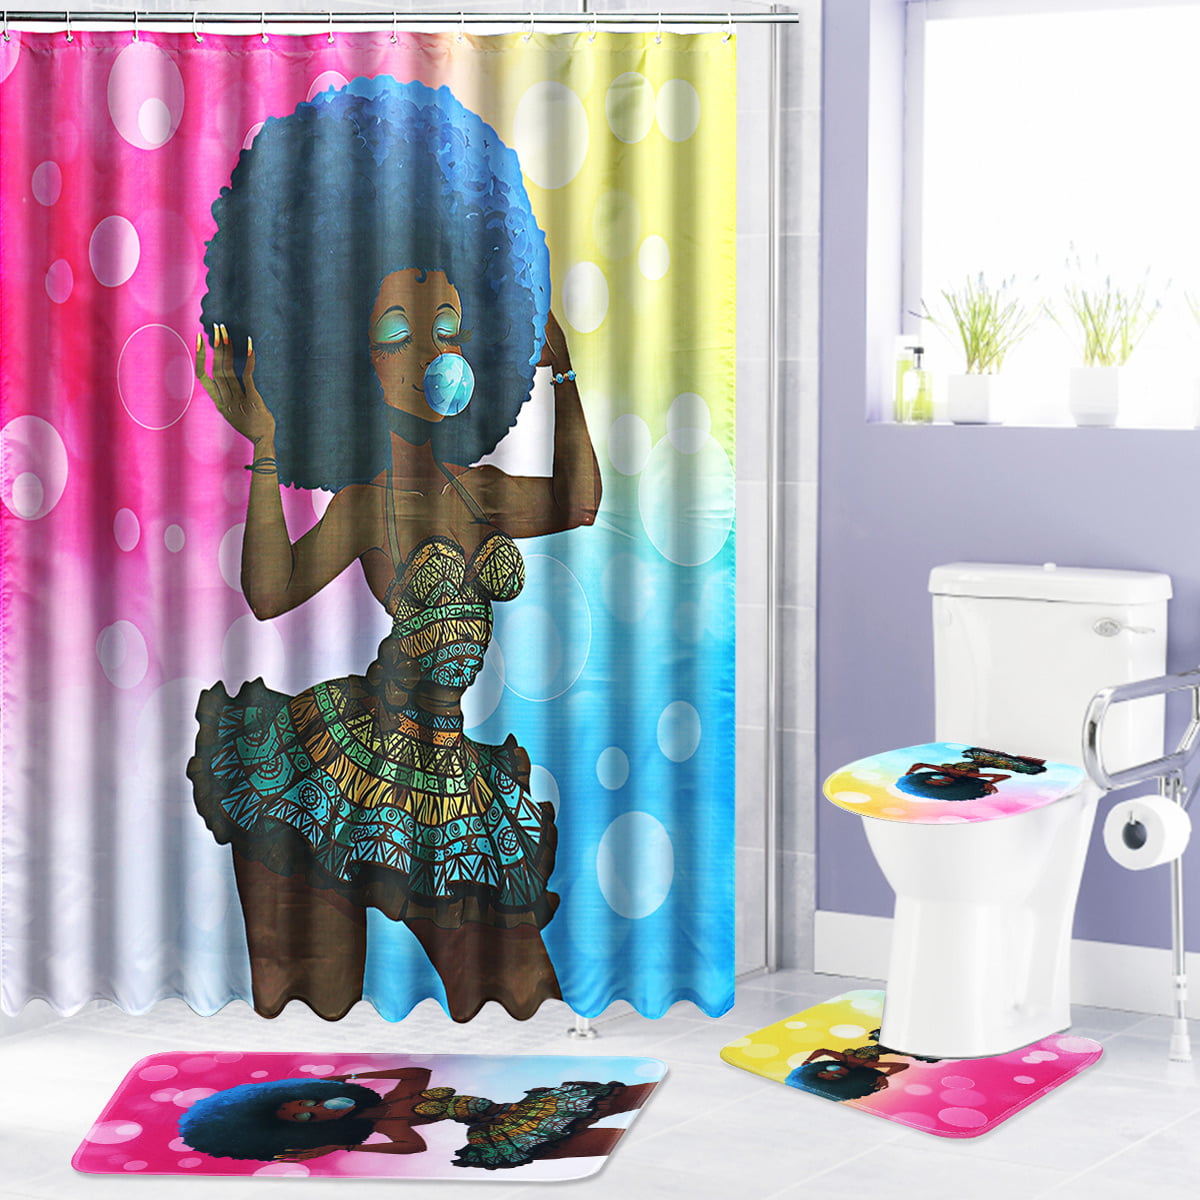 Details about   African Girl Shower Curtain Bathroom Plastic Waterproof Mildew Splash Resistant  